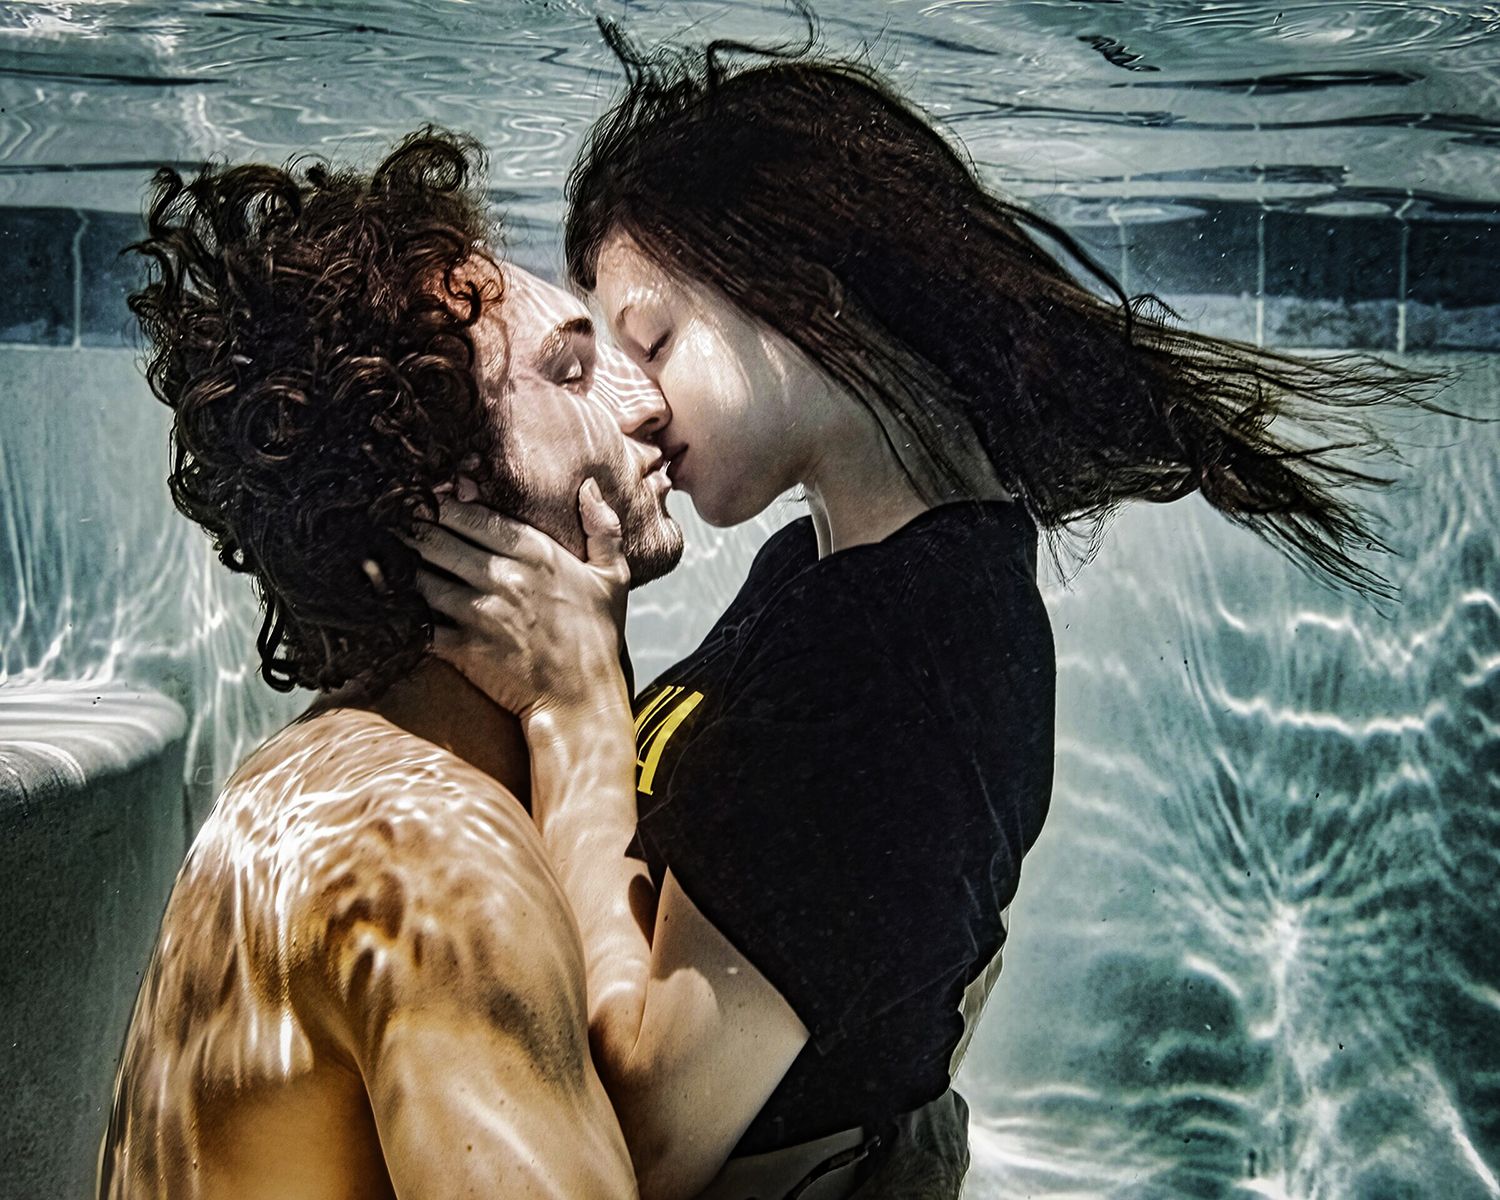 #Under Water Photography, Raymond Asiala